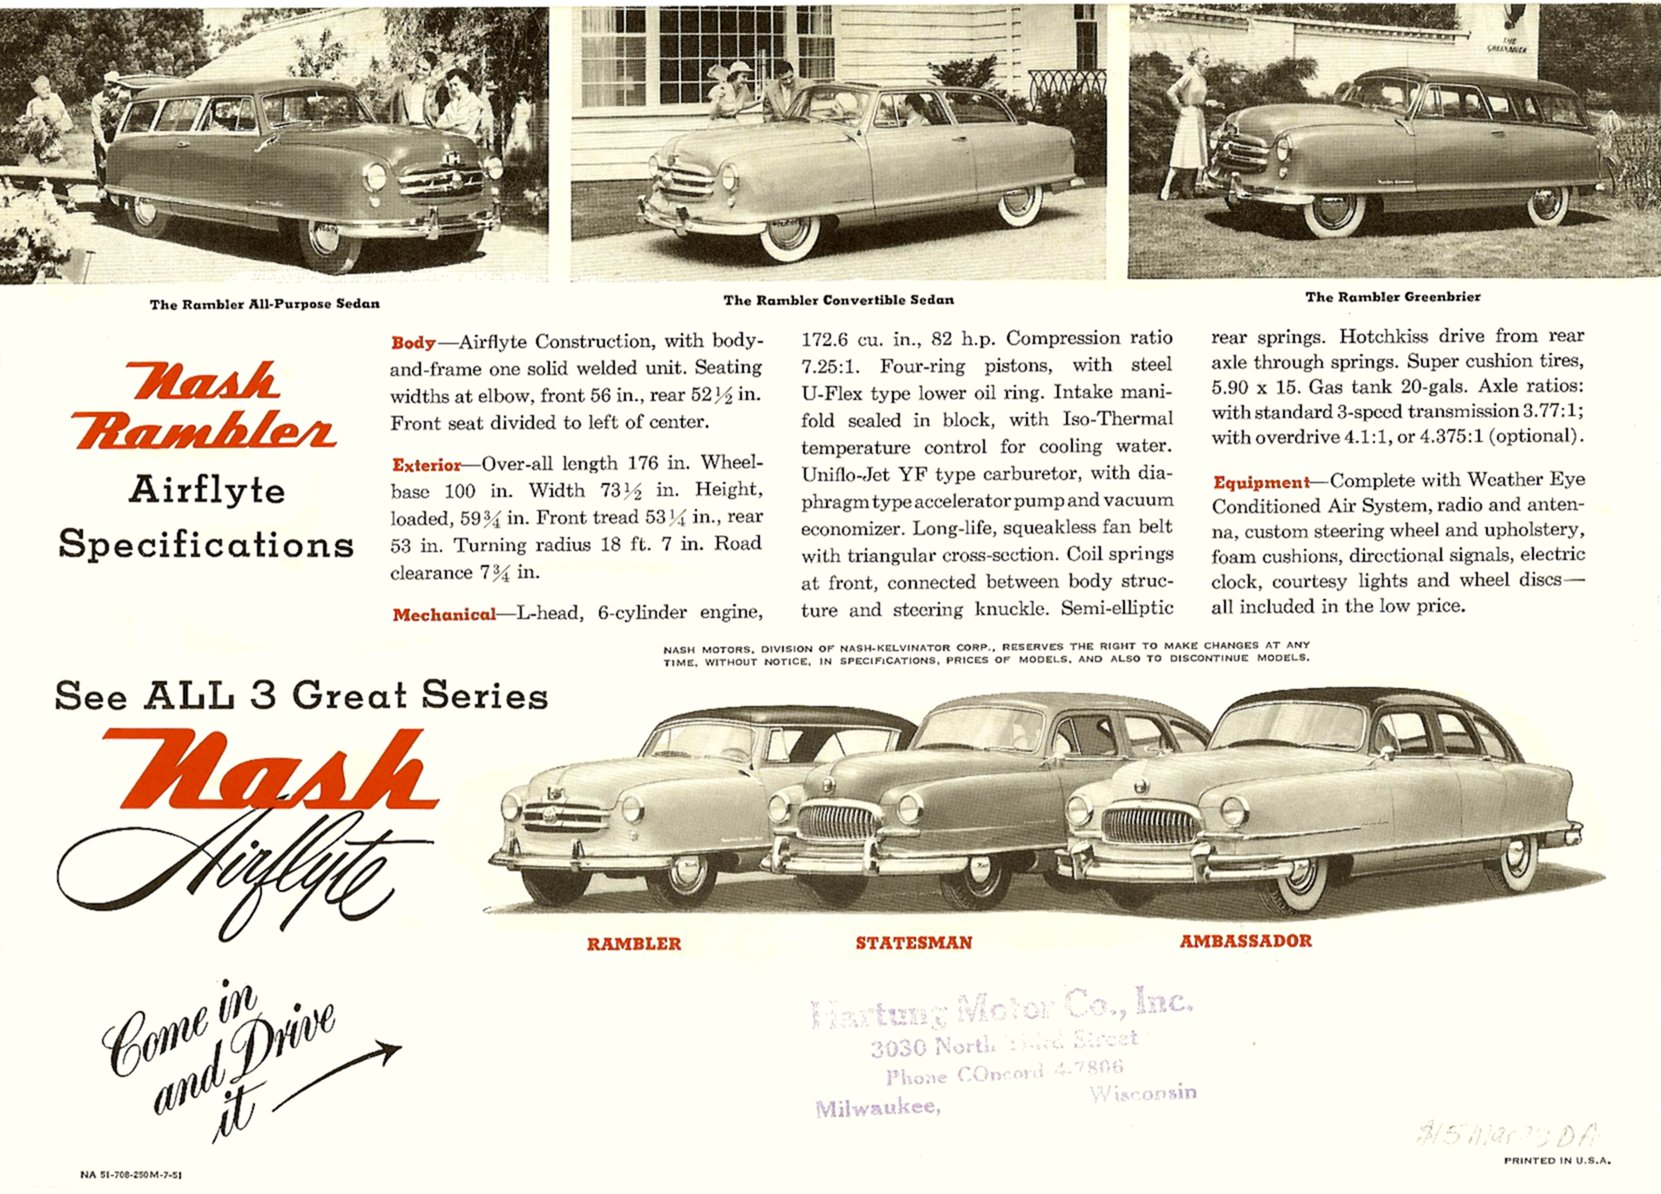 Directory Index: Nash/1951 Nash/1951 Nash Rambler Country Club Foldout